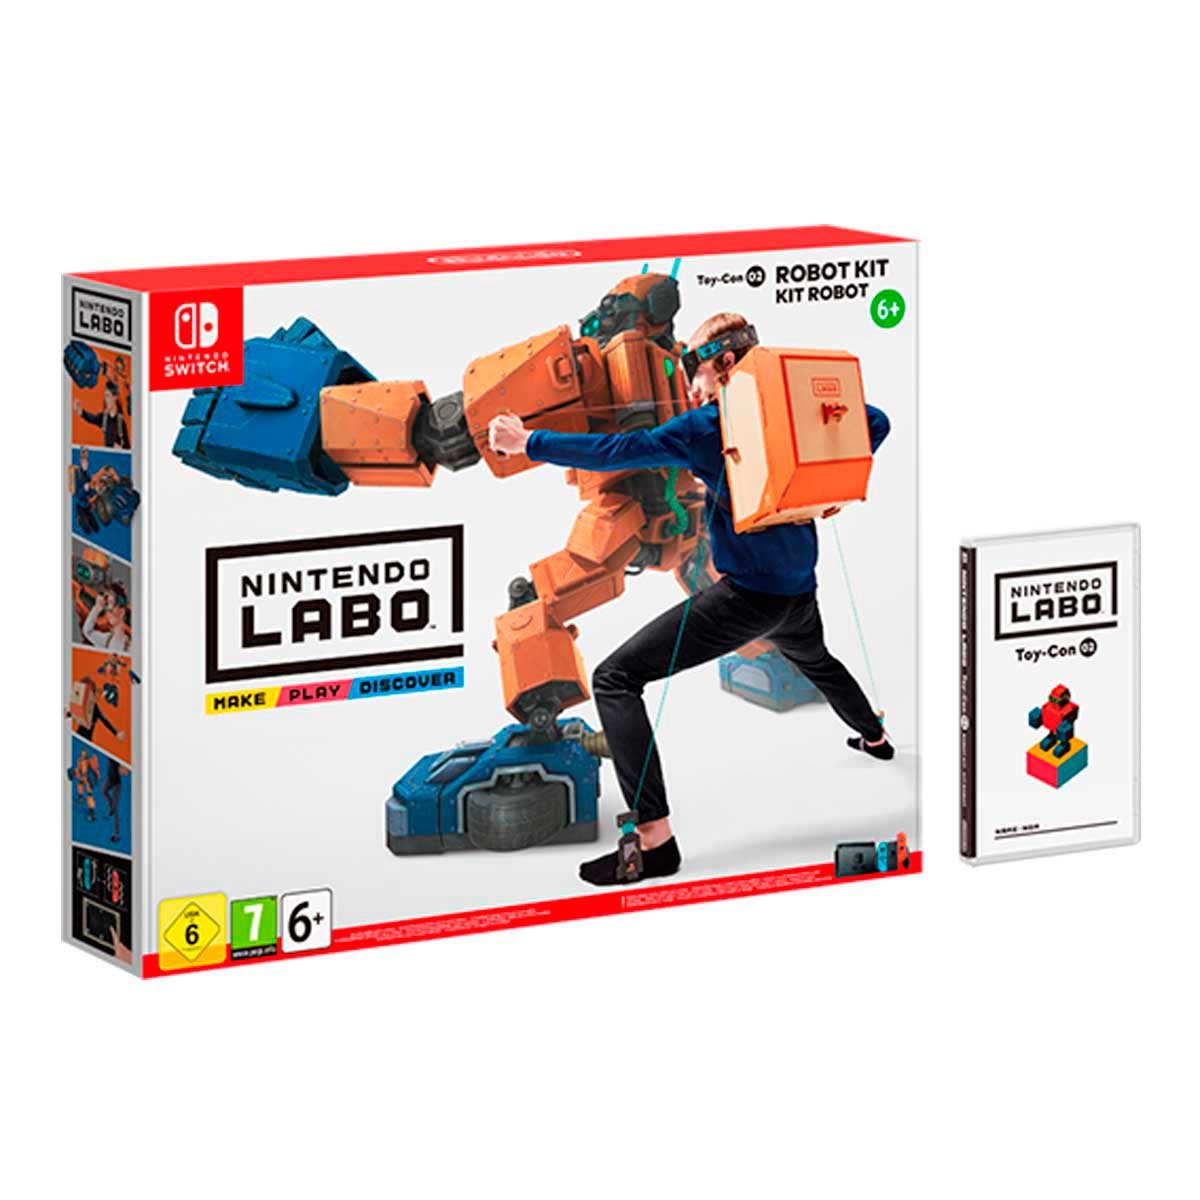 Nintendo Switch Labo Toy con 02 Robot Kit